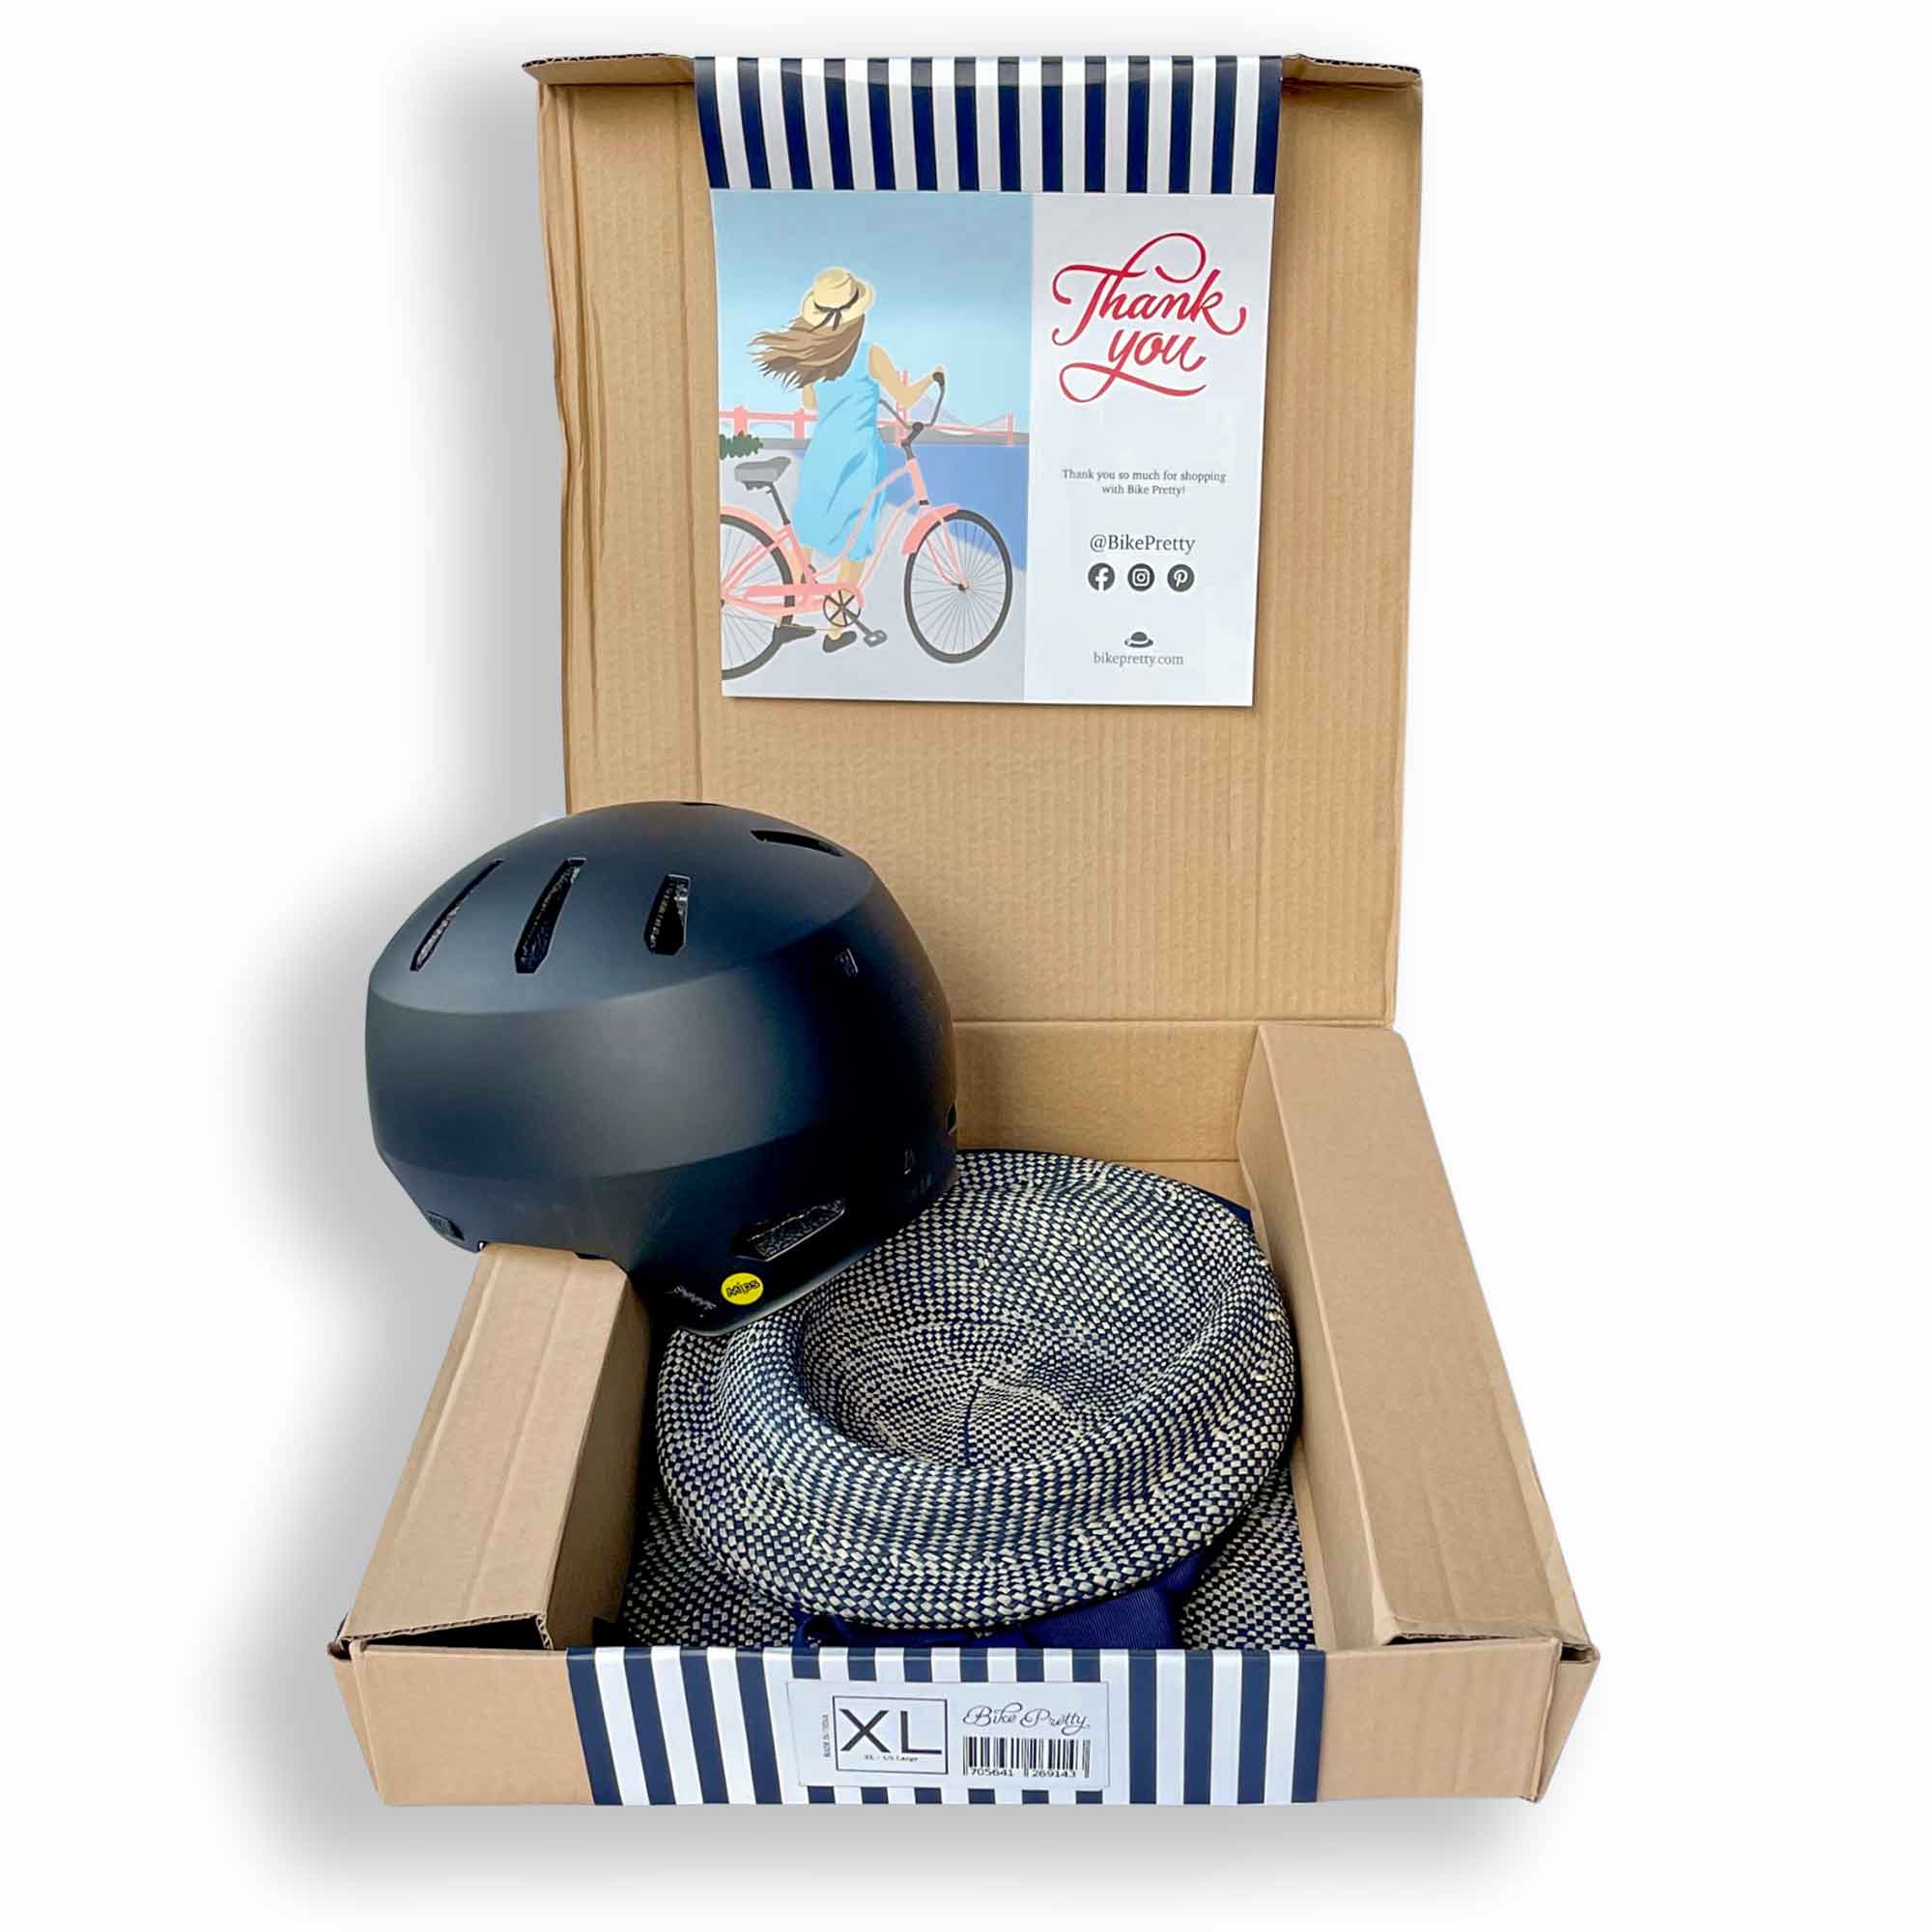 Thousand Helmet + Shibori Blue Straw Hat Helmet Cover – Bike Pretty